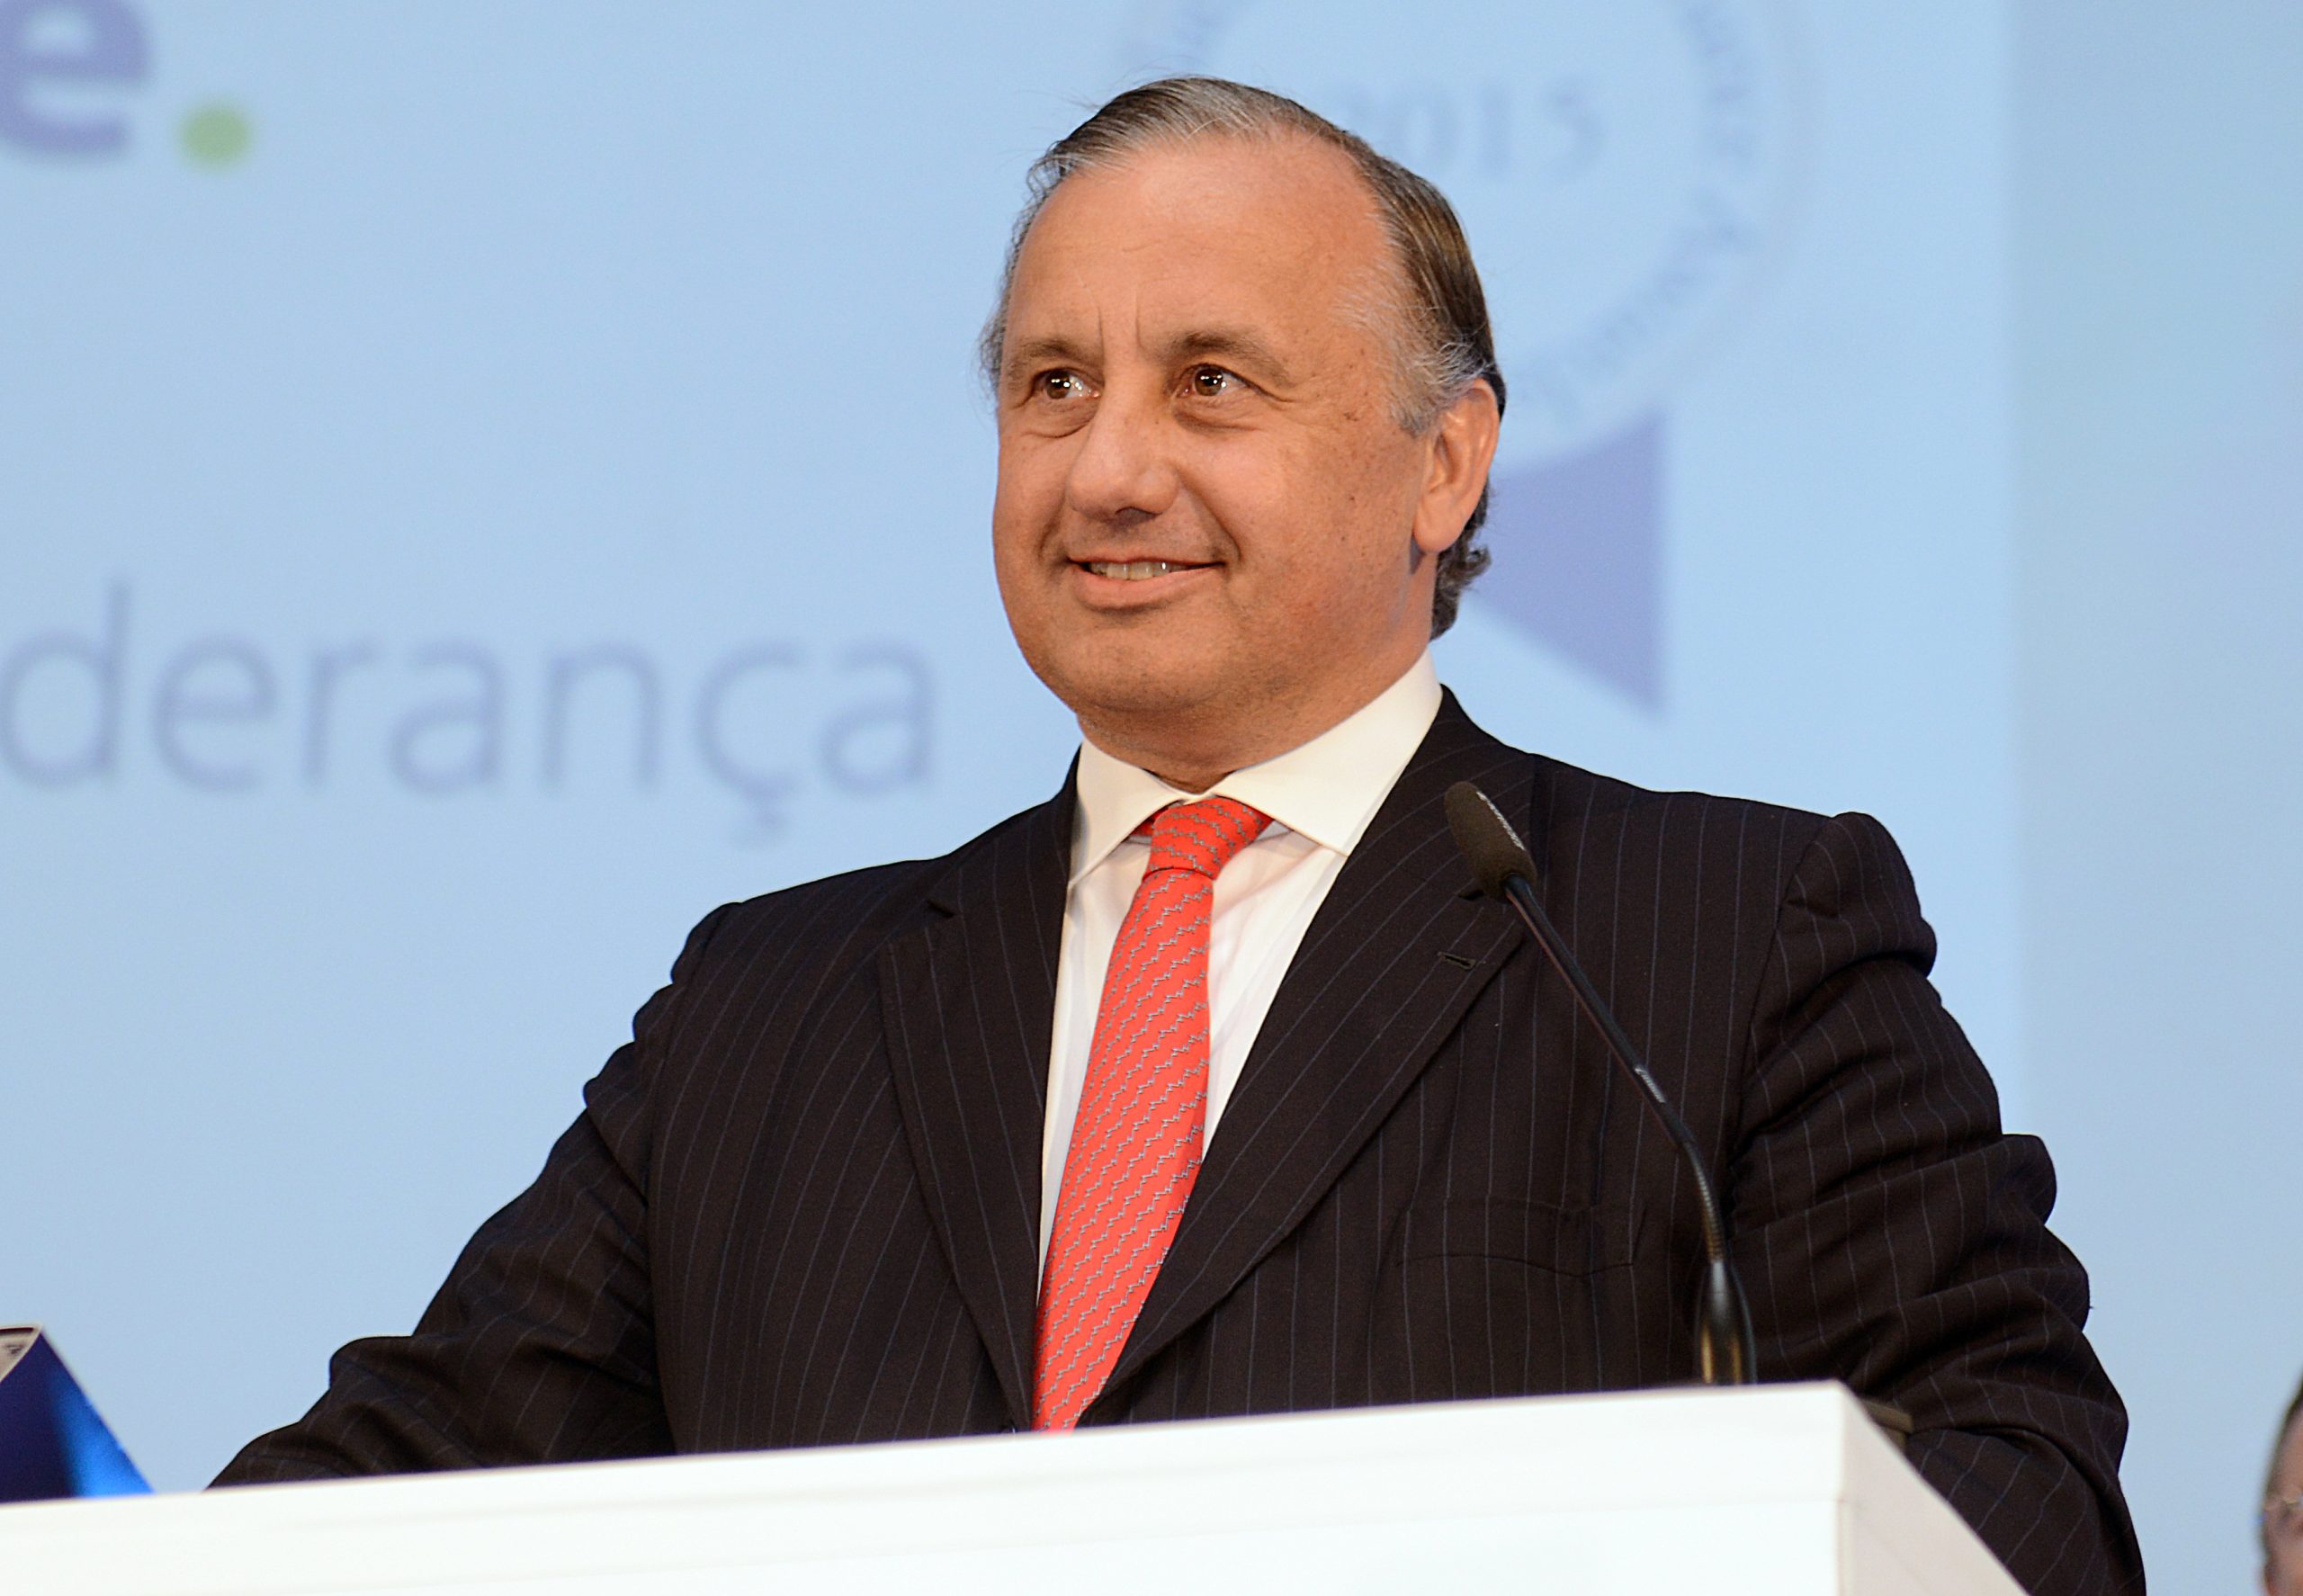 Francisco de Lacerda wins Best CEO Award